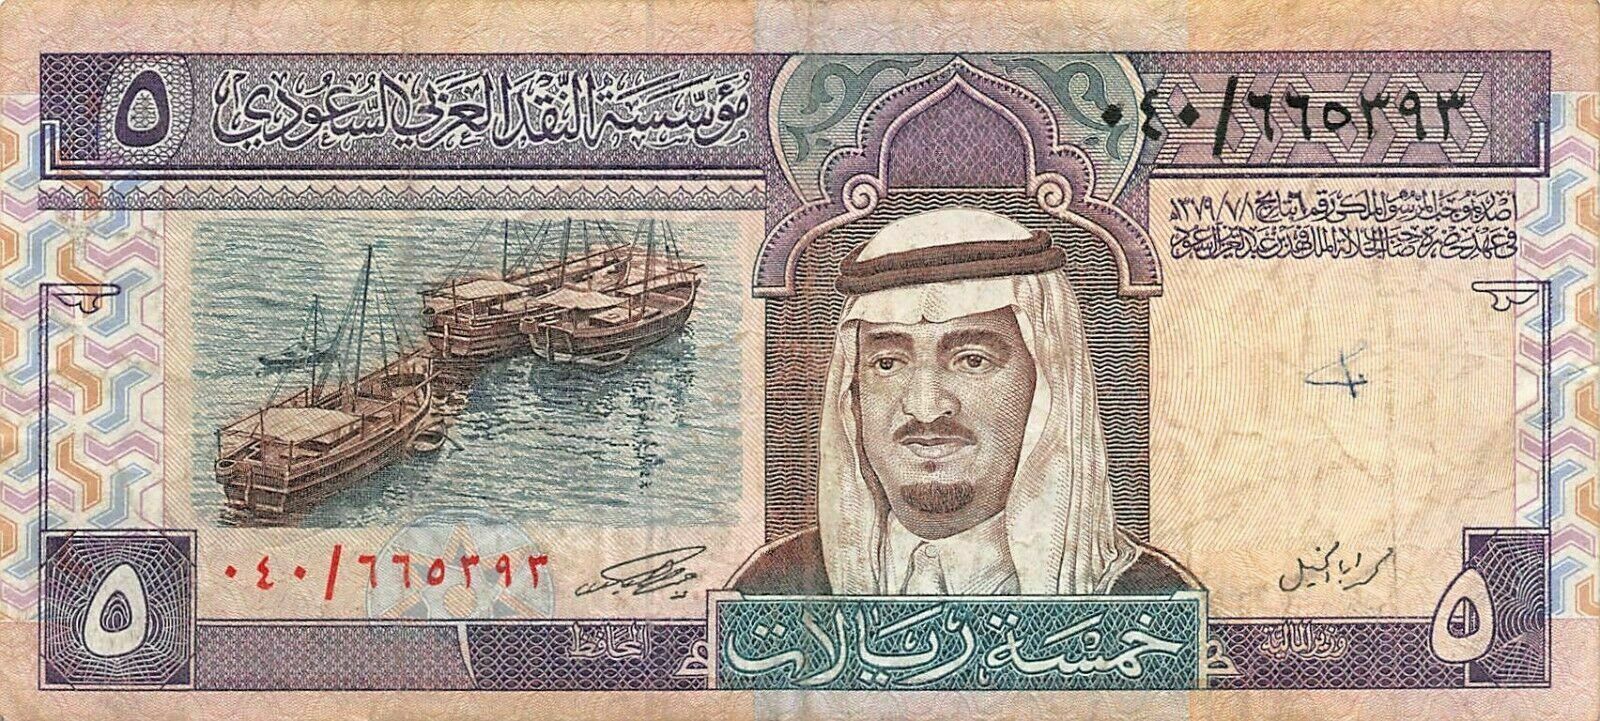 Saudi Arabia 5 Riyals 1983  P 22a  Series 040  Error  Circulated Banknote Bha